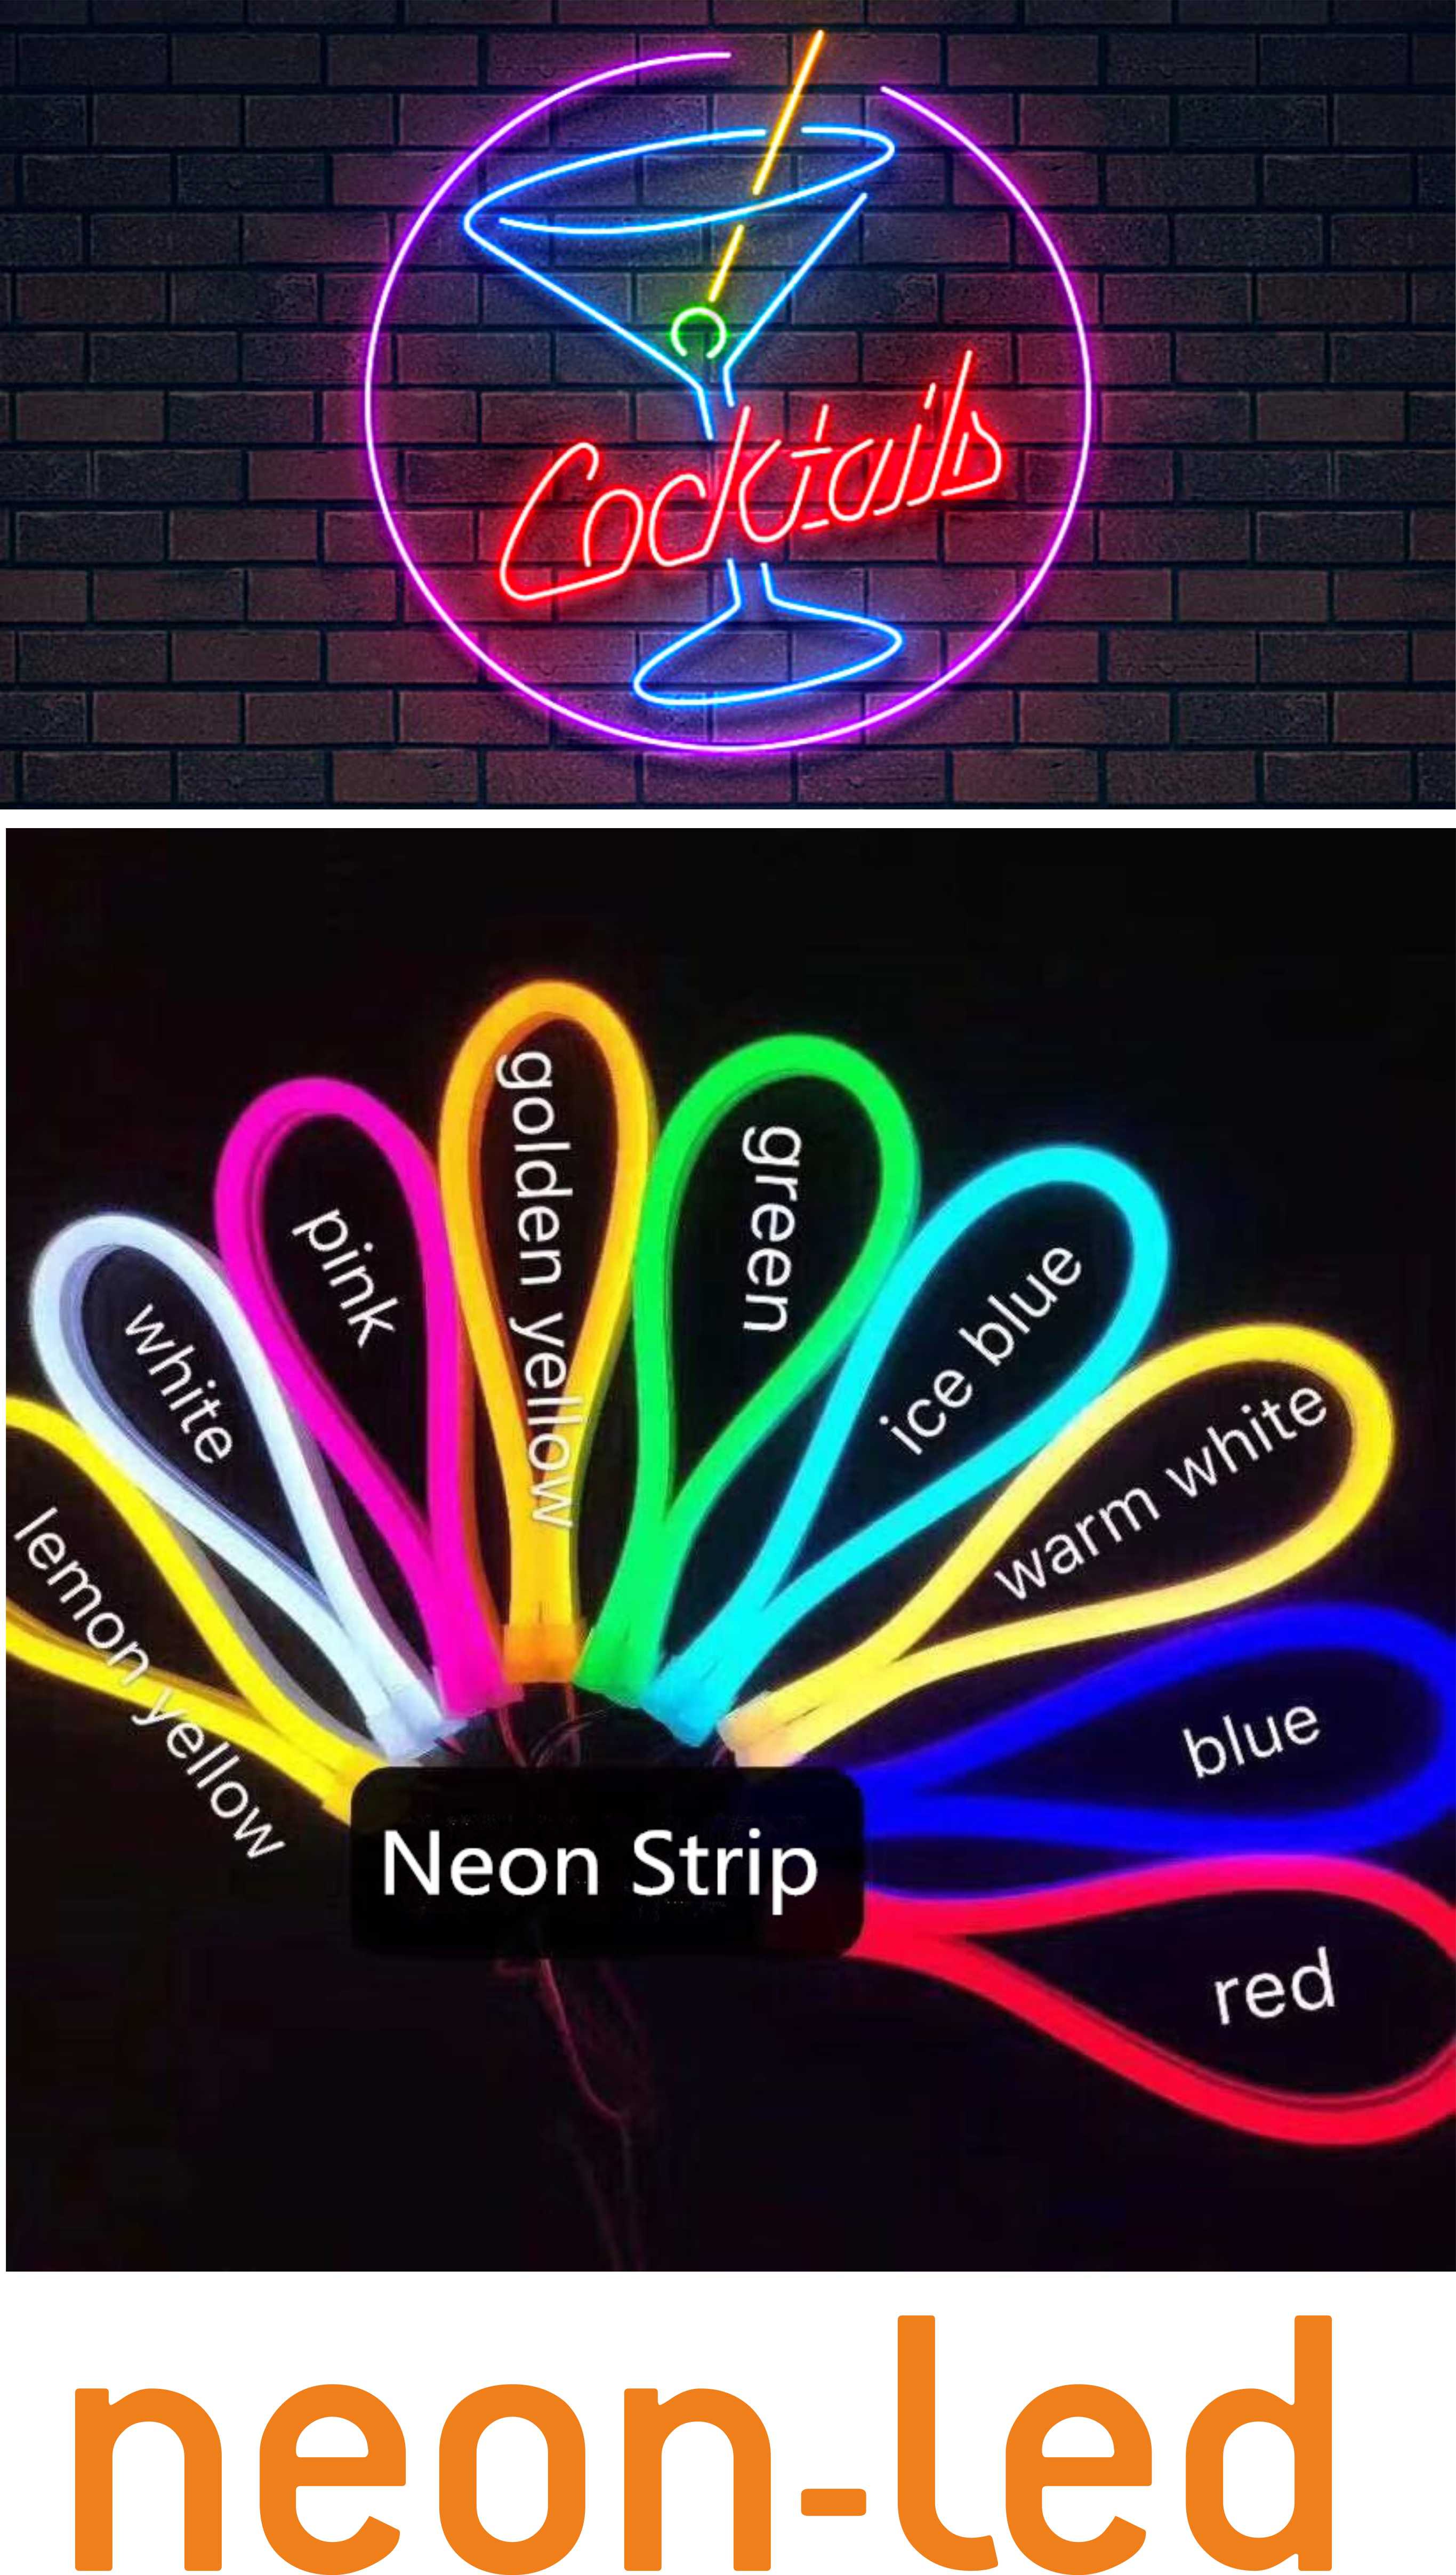 Neon-led